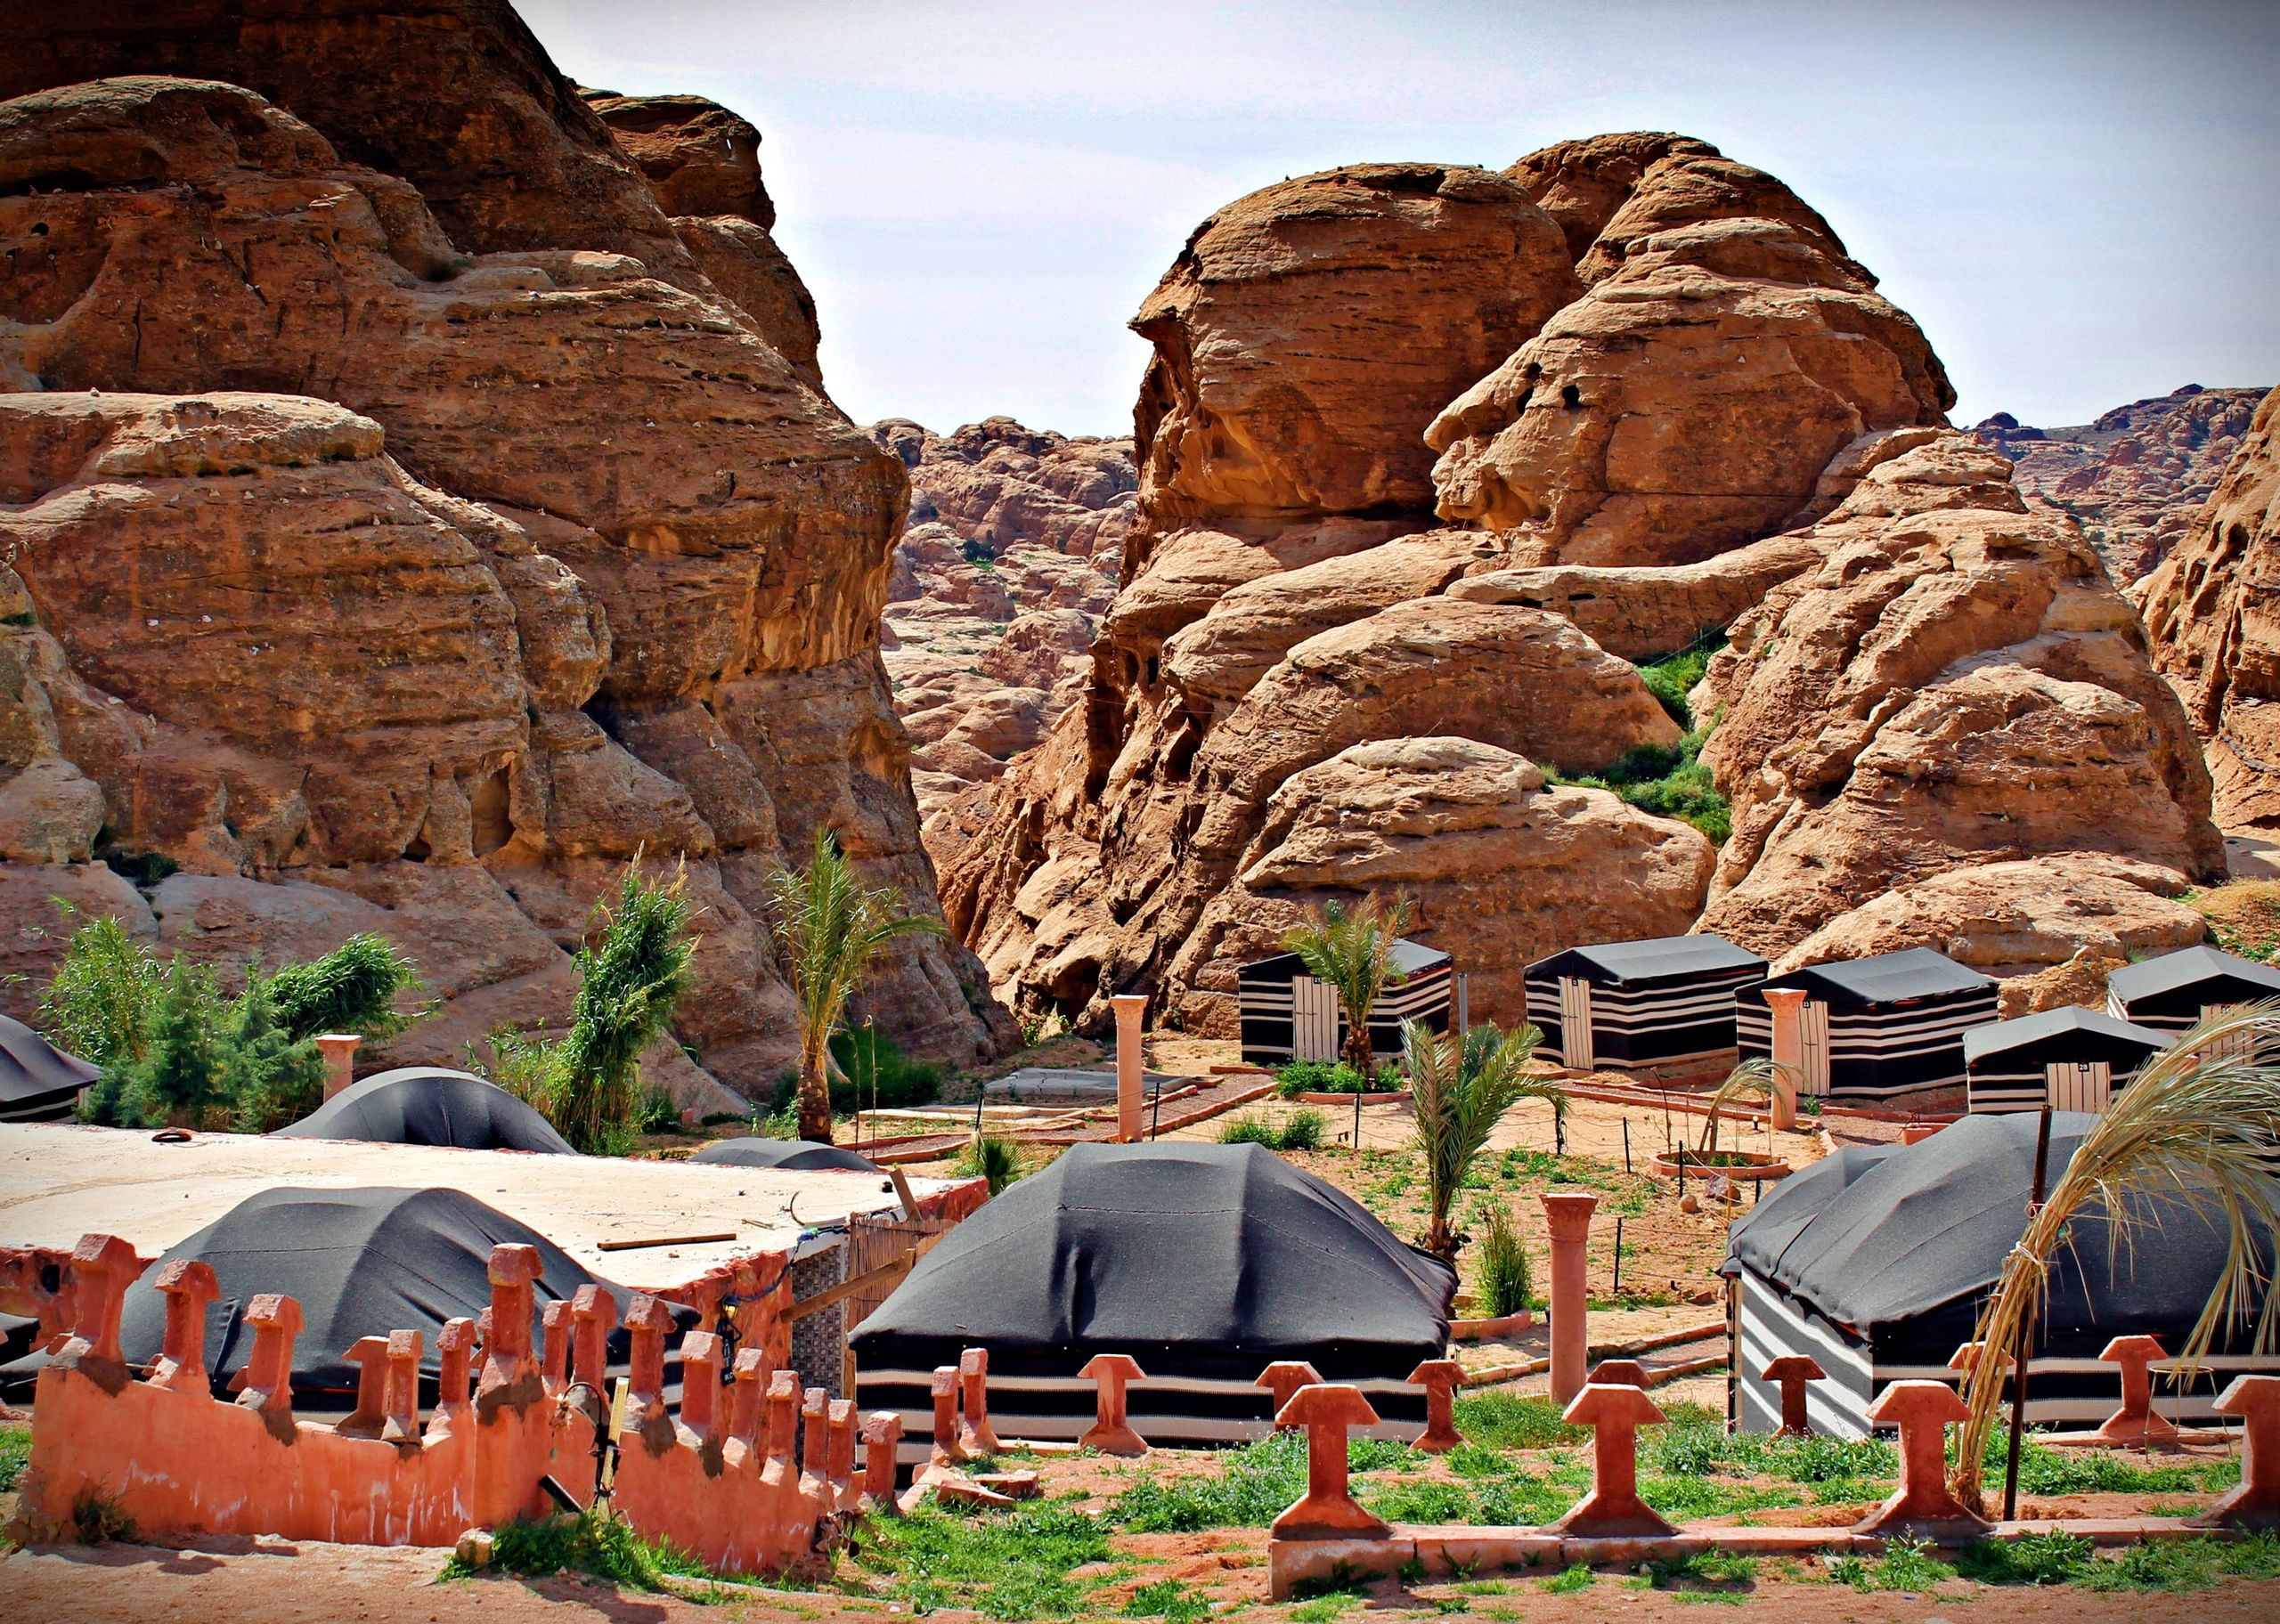 Bedouin Camp close to Petra, traditional bedouin tents close to Petra, bedouin camp in Little Petra.